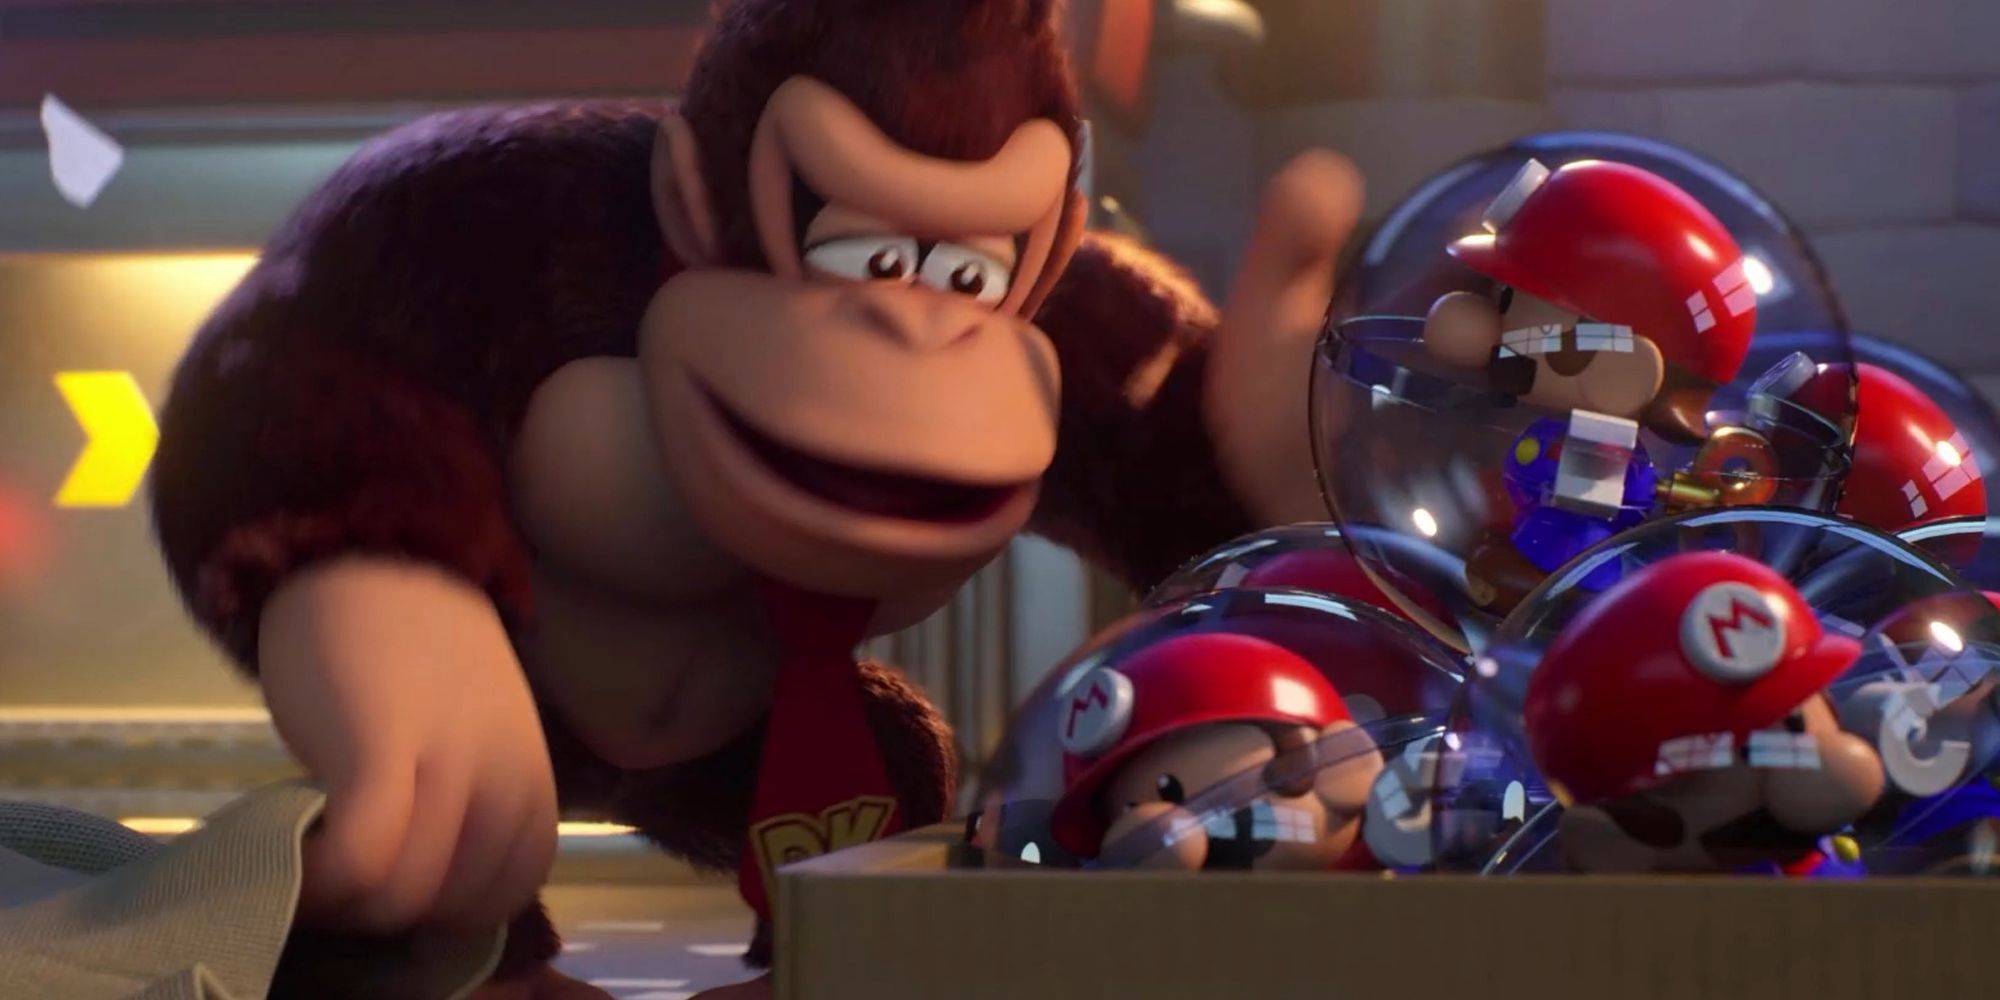 Mario vs Donkey Kong remake screenshot of DK stealing Mini Mario toys.